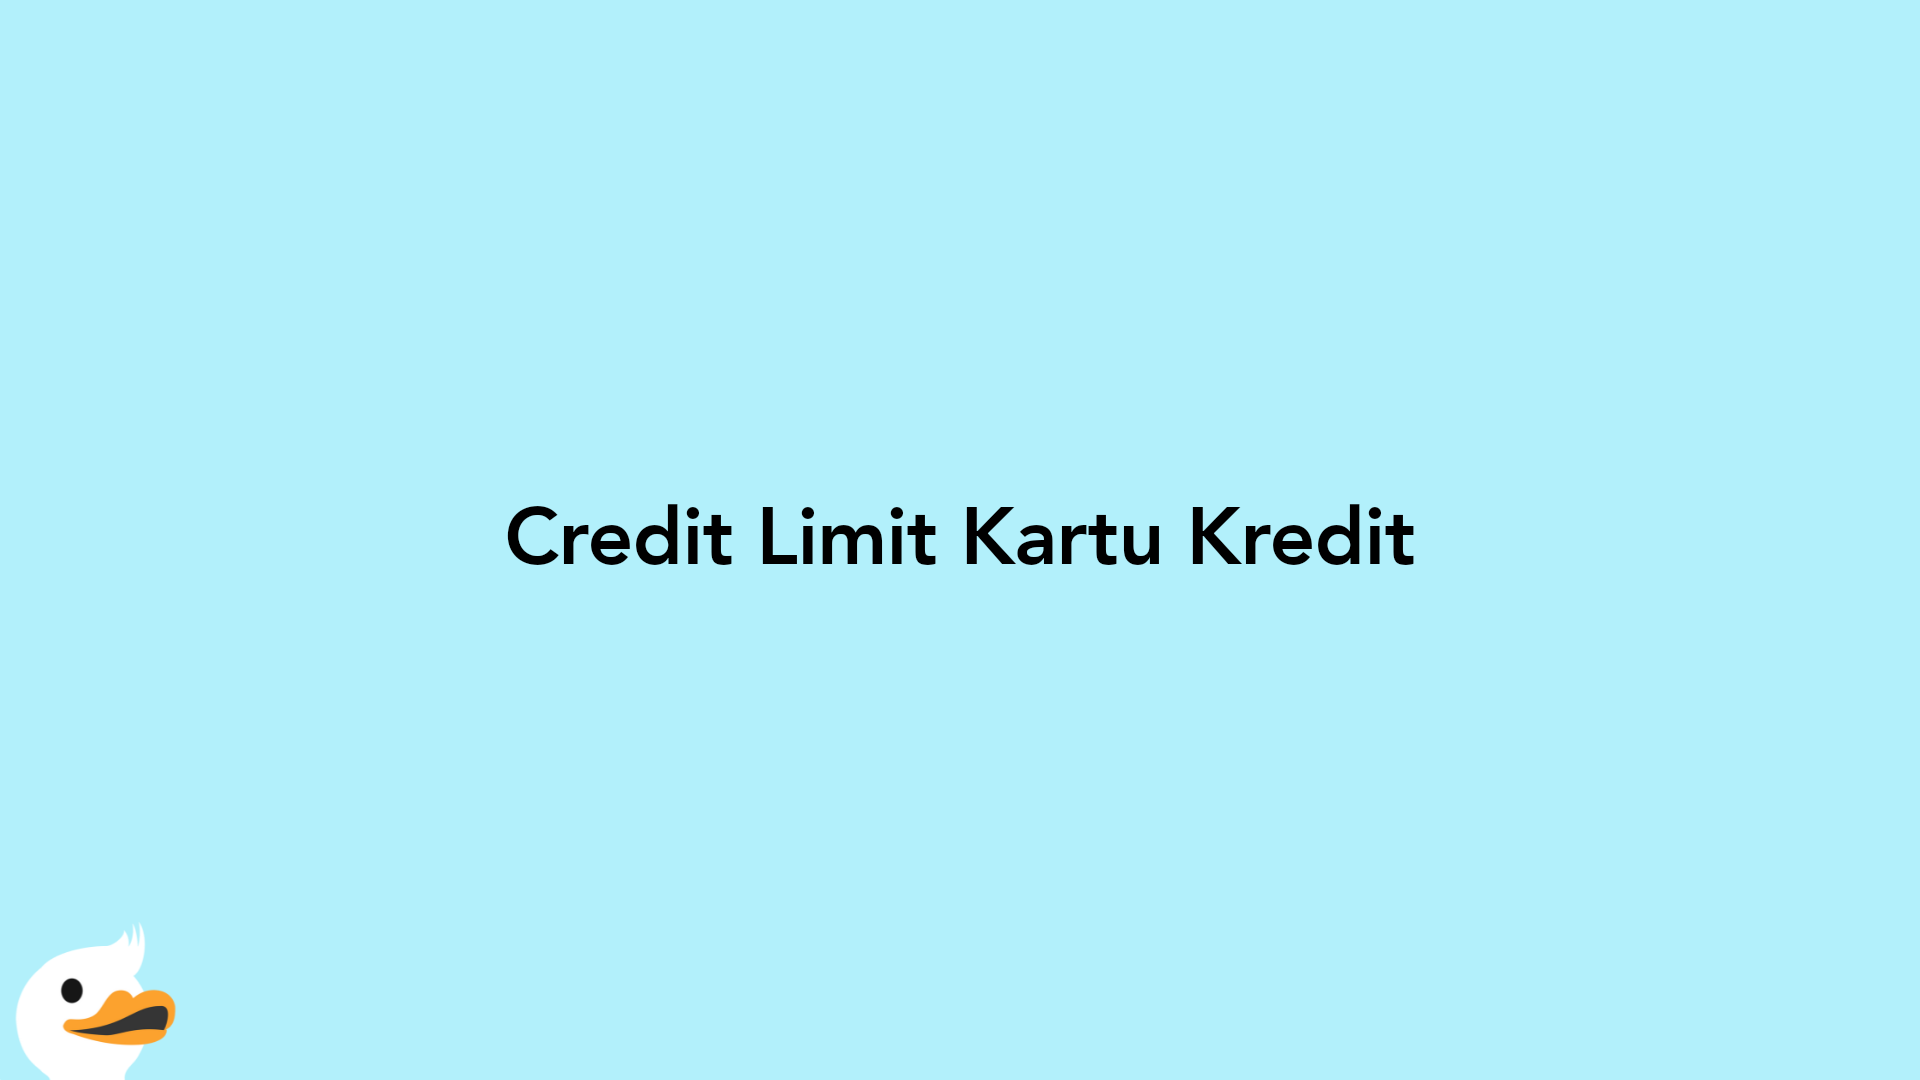 Credit Limit Kartu Kredit